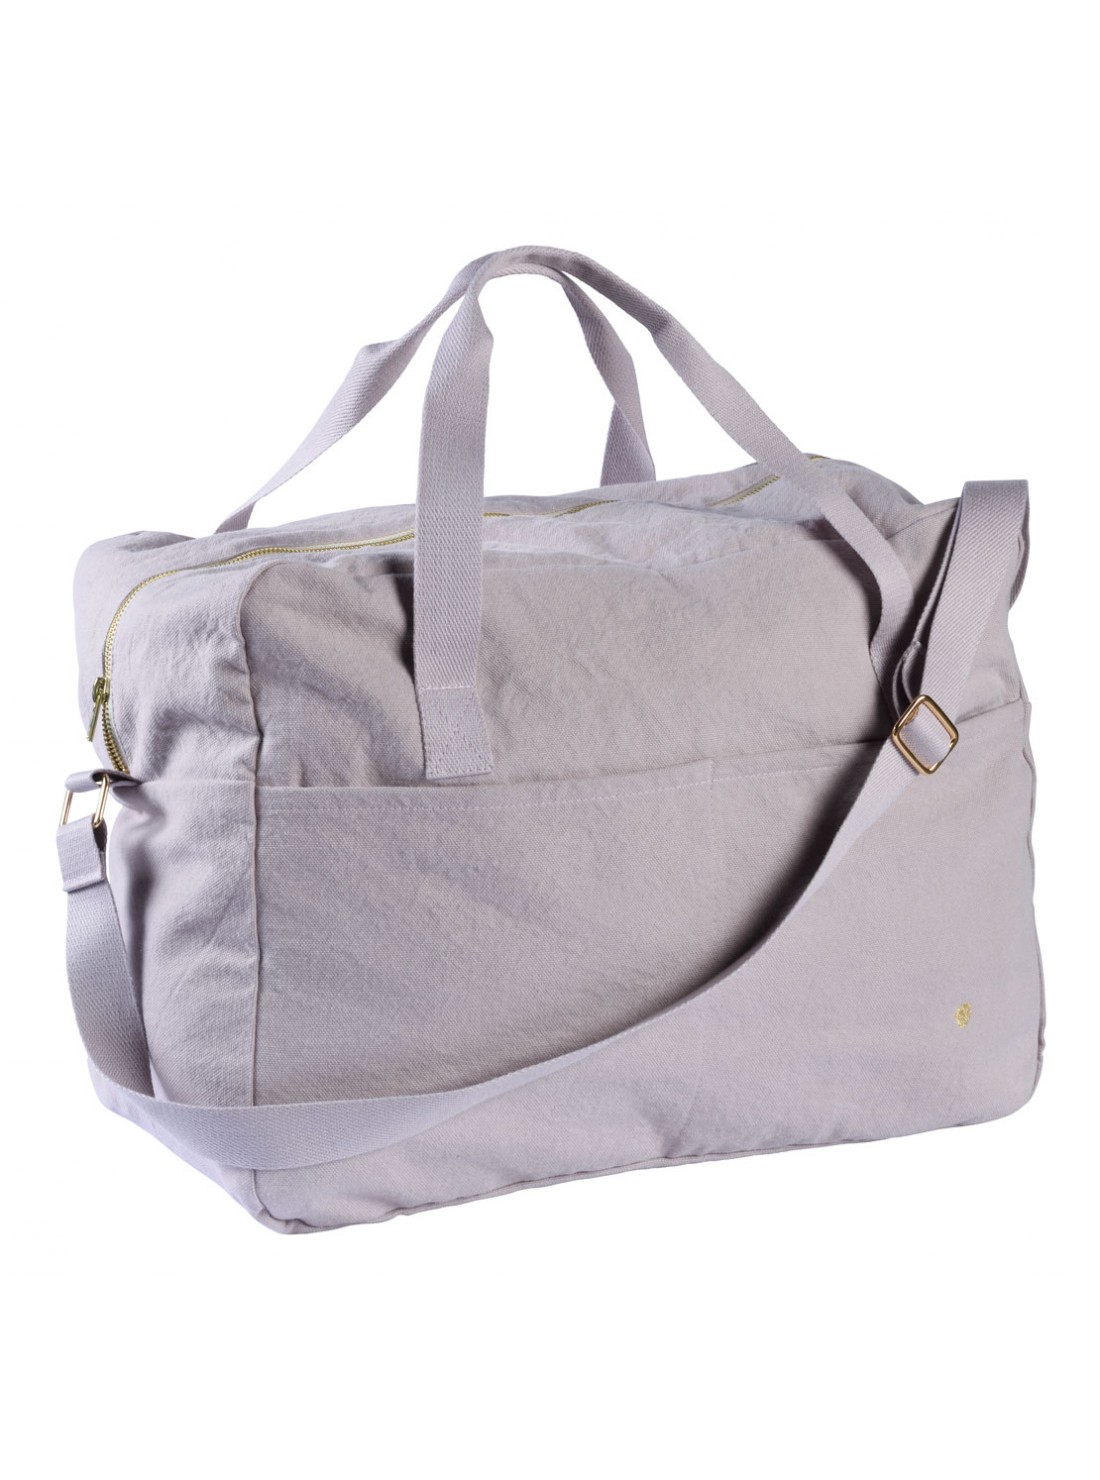 Travel bag organic cotton